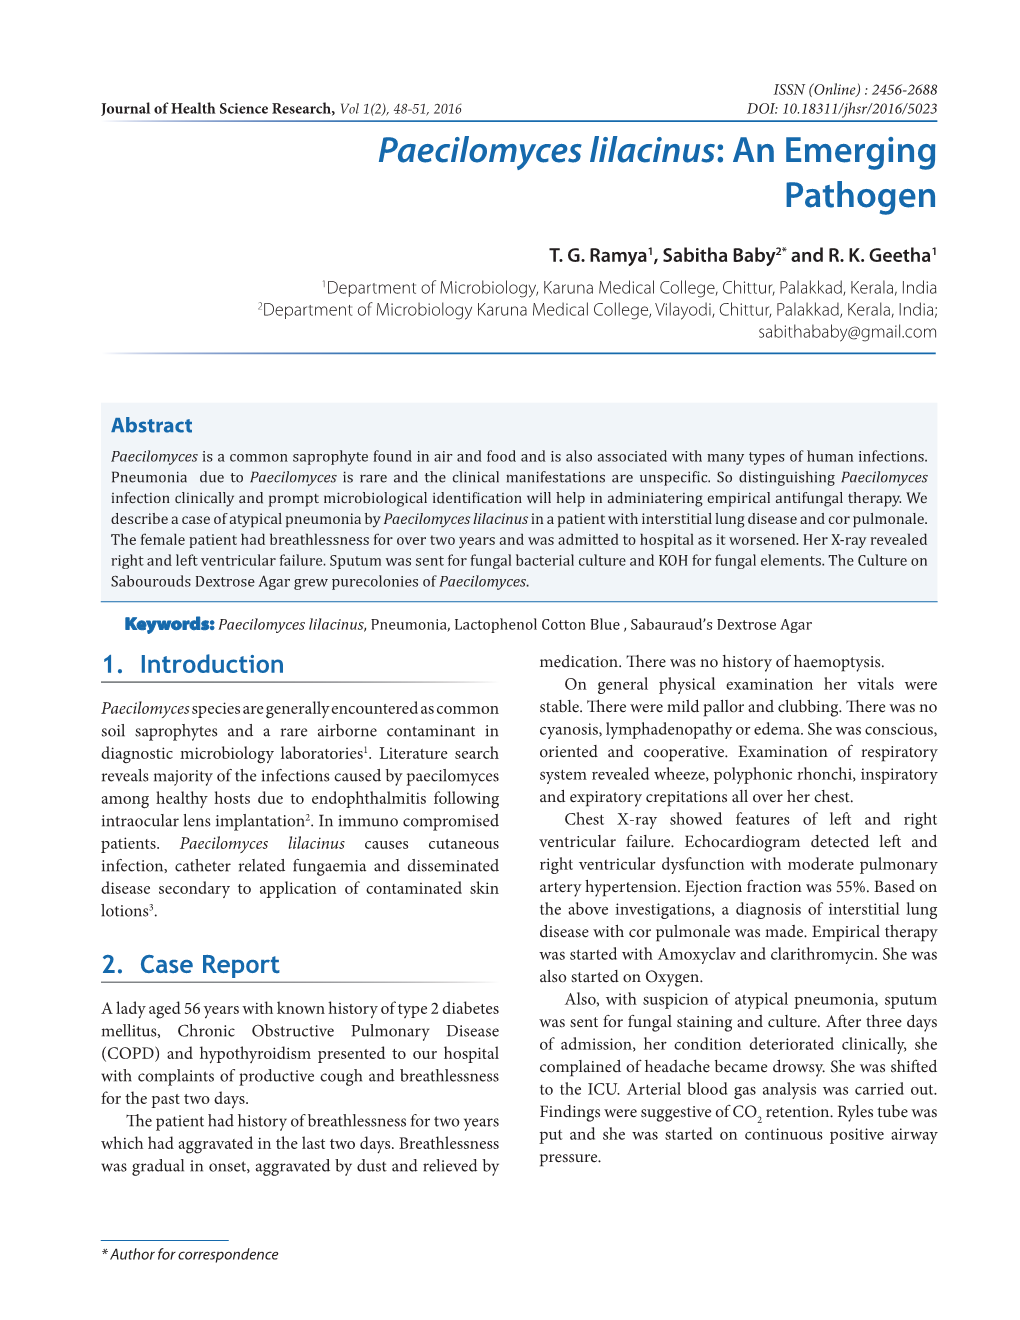 Paecilomyces Lilacinus: an Emerging Pathogen